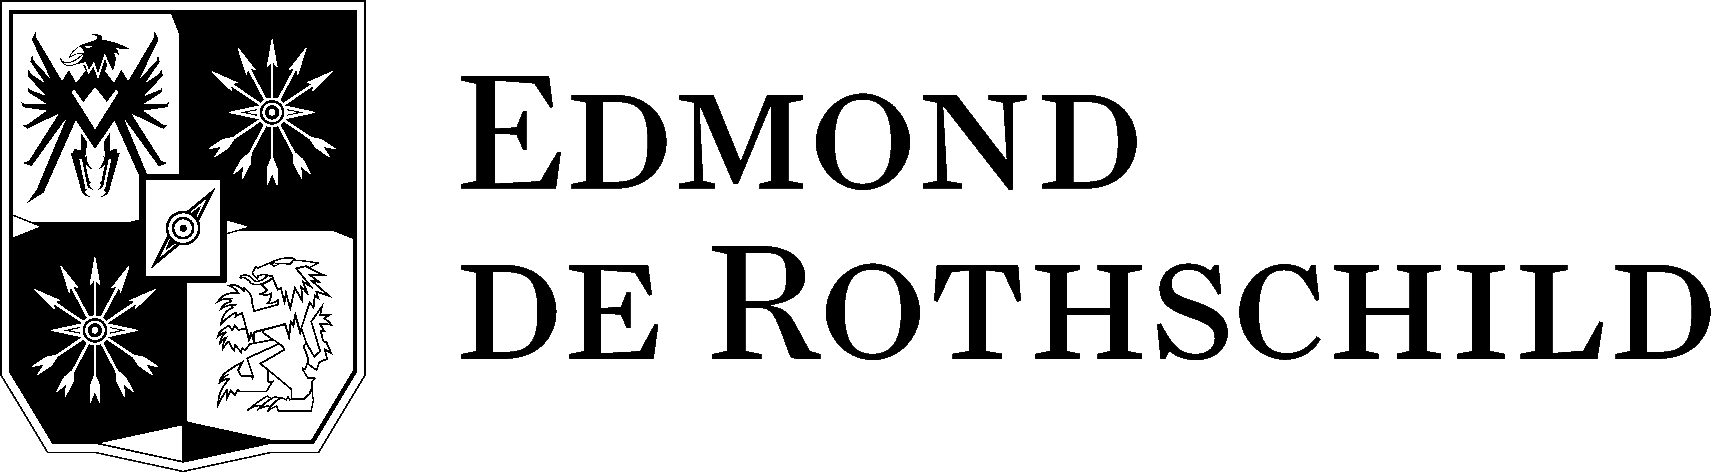 Edmond de Rothschild-logo 1